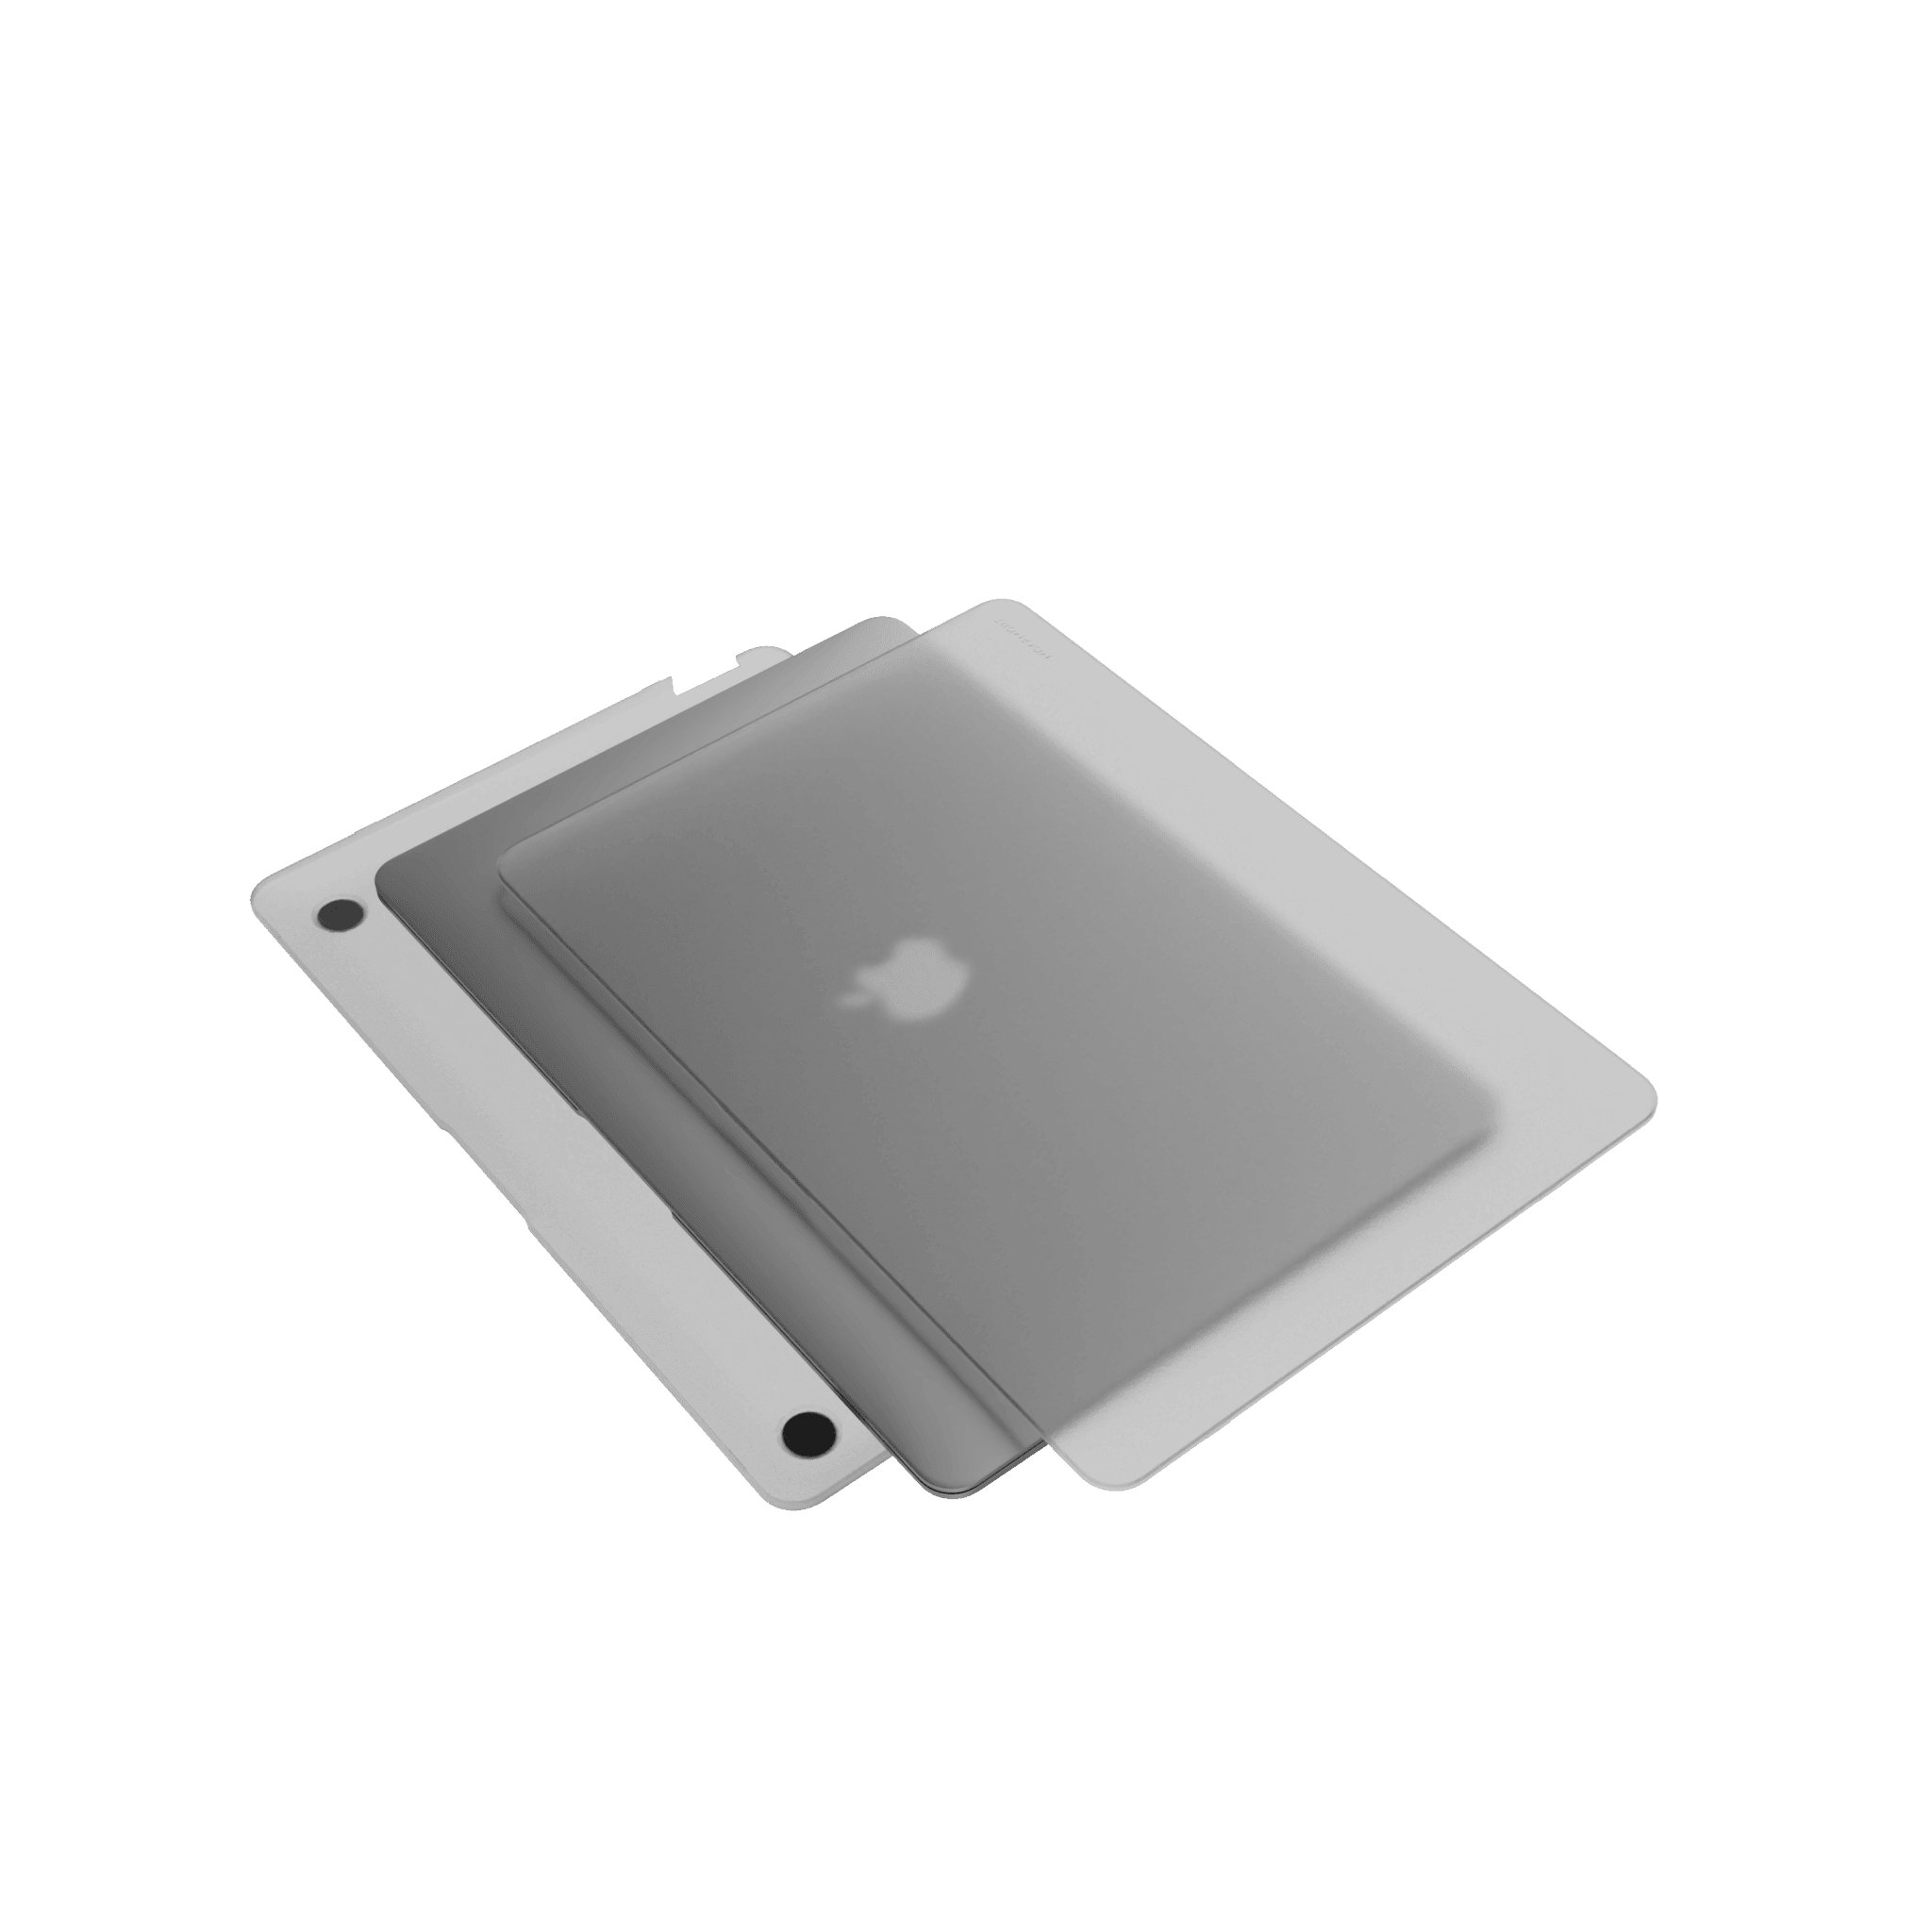 macbook air 2020 dark grey